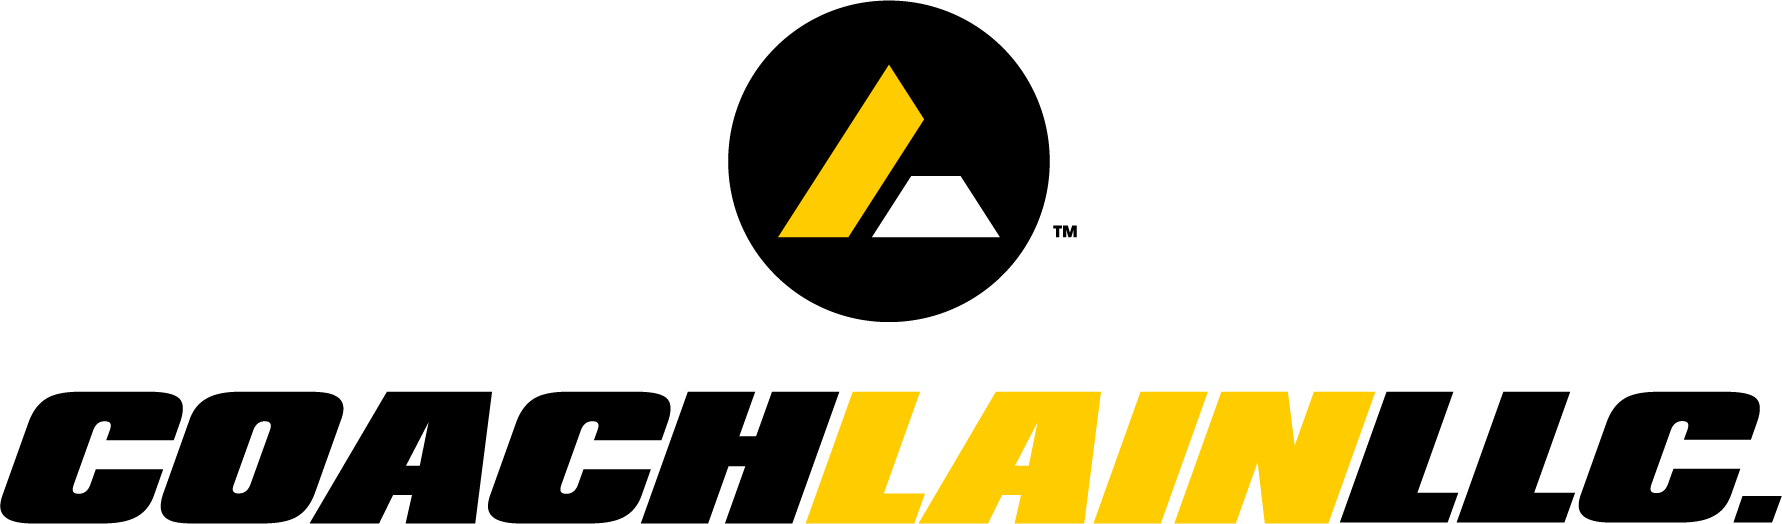 Coach Lain LLC logo